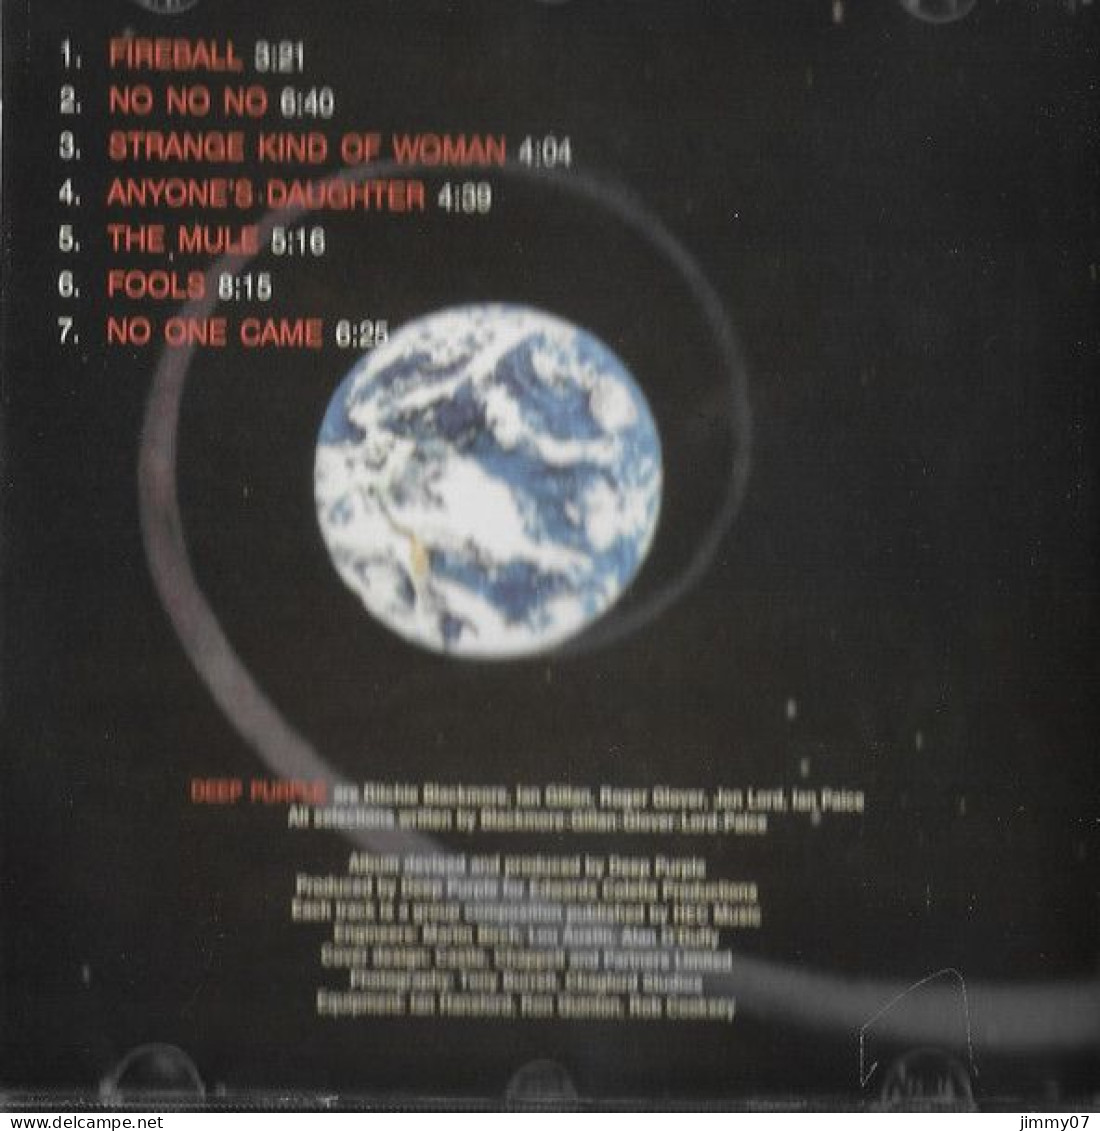 Deep Purple - Fireball (CD, Album) - Rock